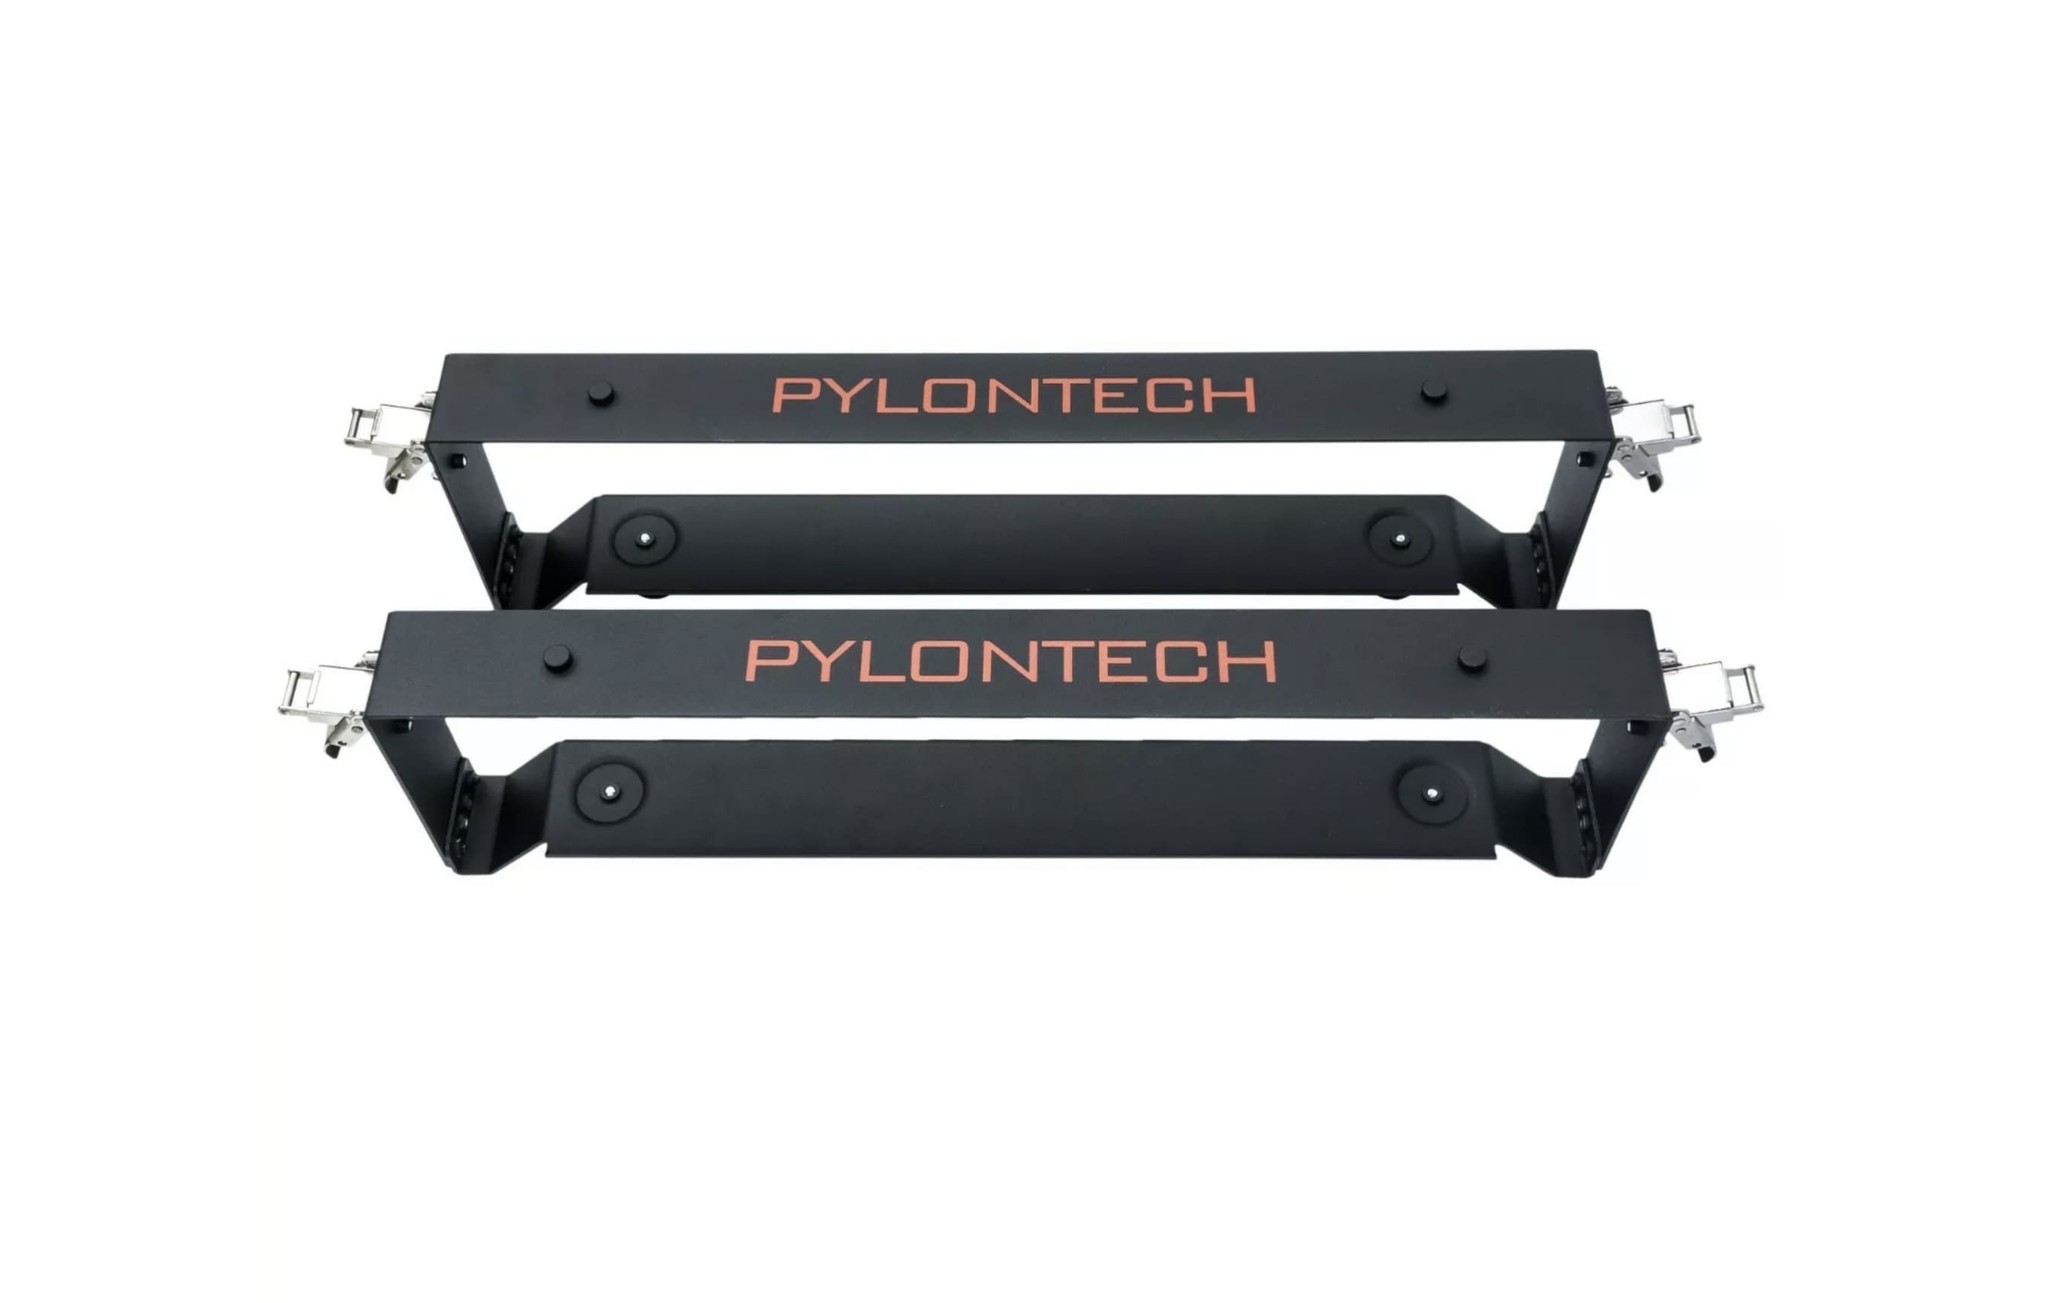 Pylontech holder / brackets for US2000C LIFEPO4 battery